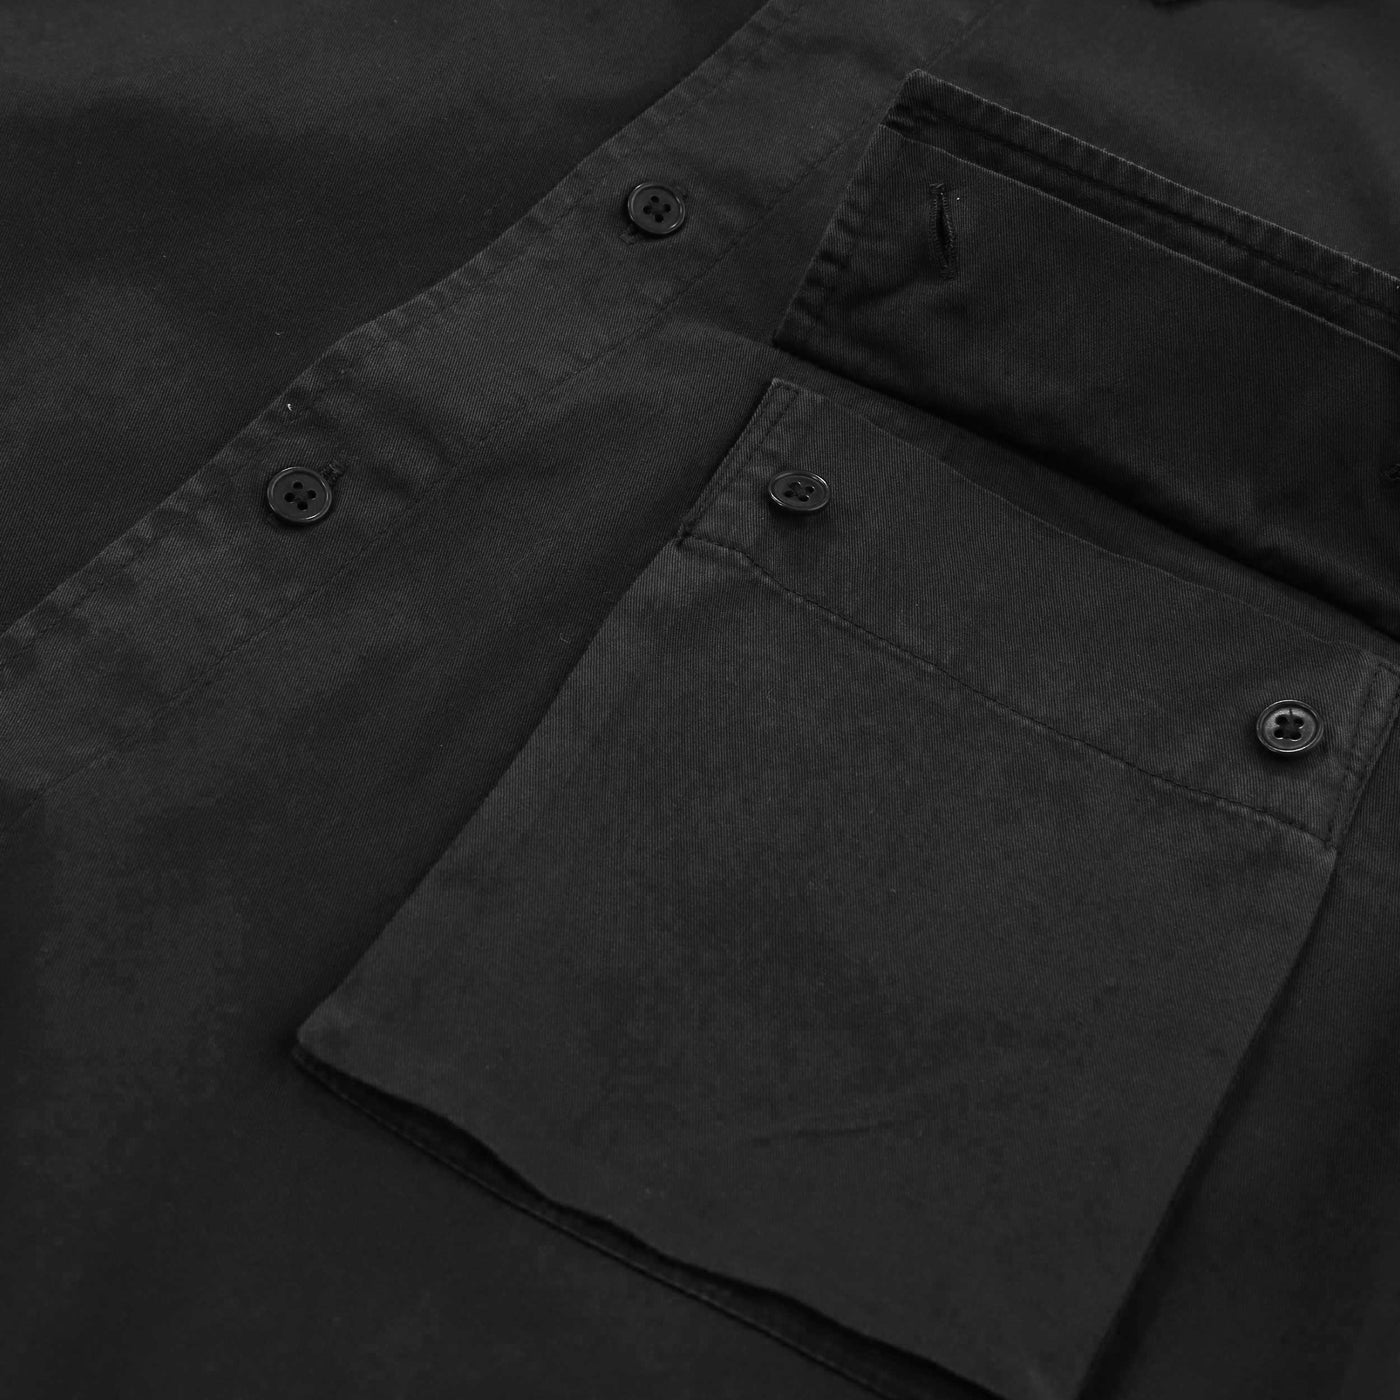 Belstaff Scale Shirt in Black Pocket